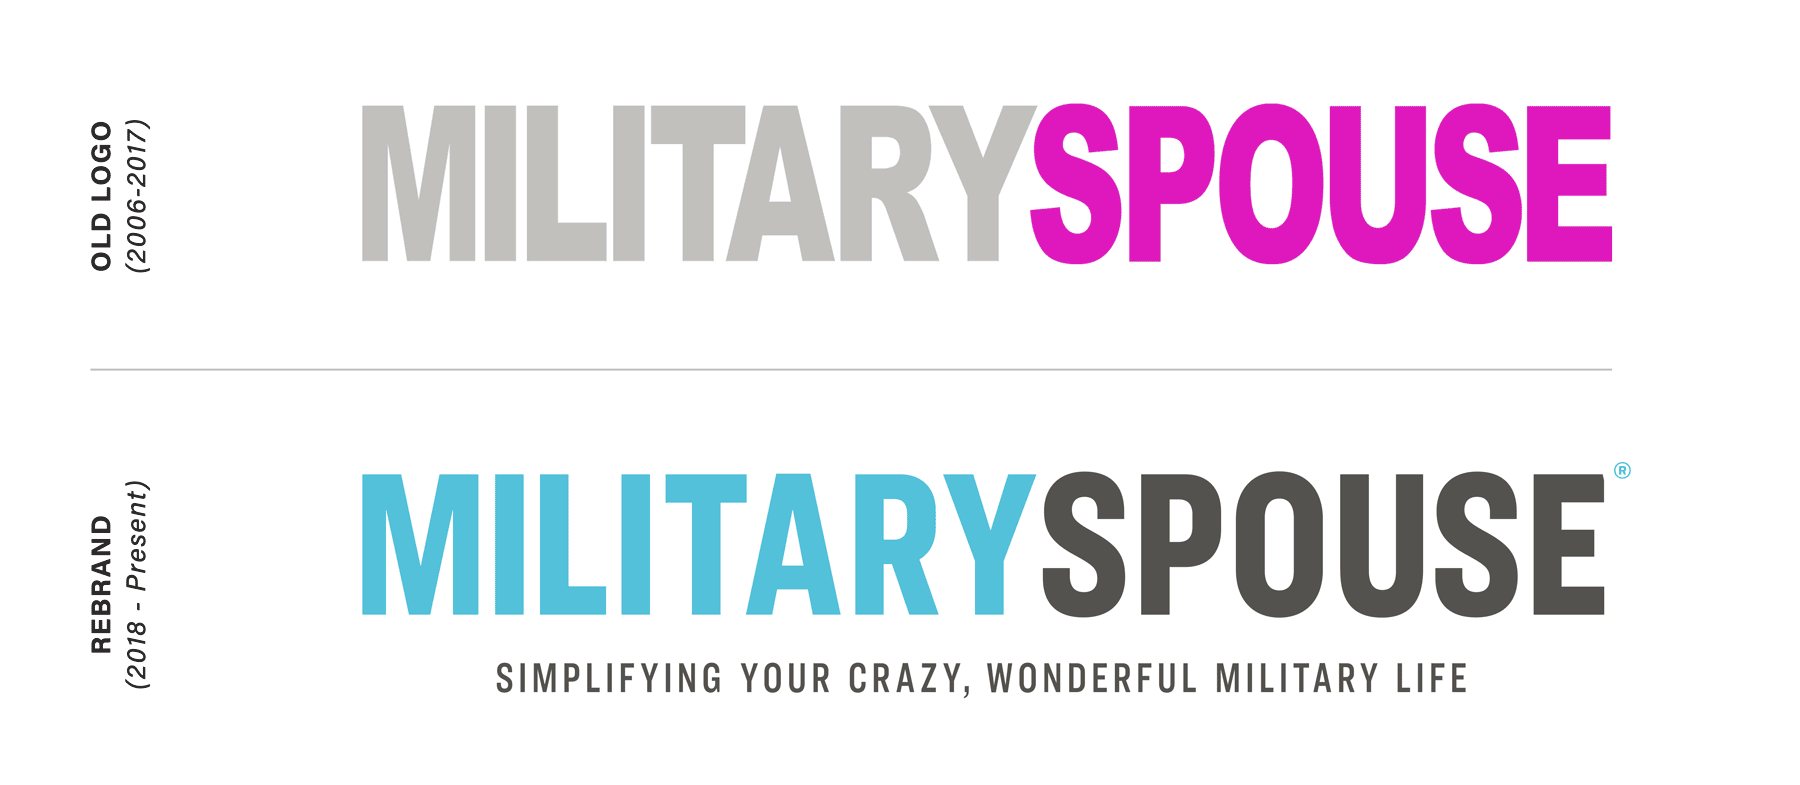 Military Spouse Logo Animated Maiocco Design Co.